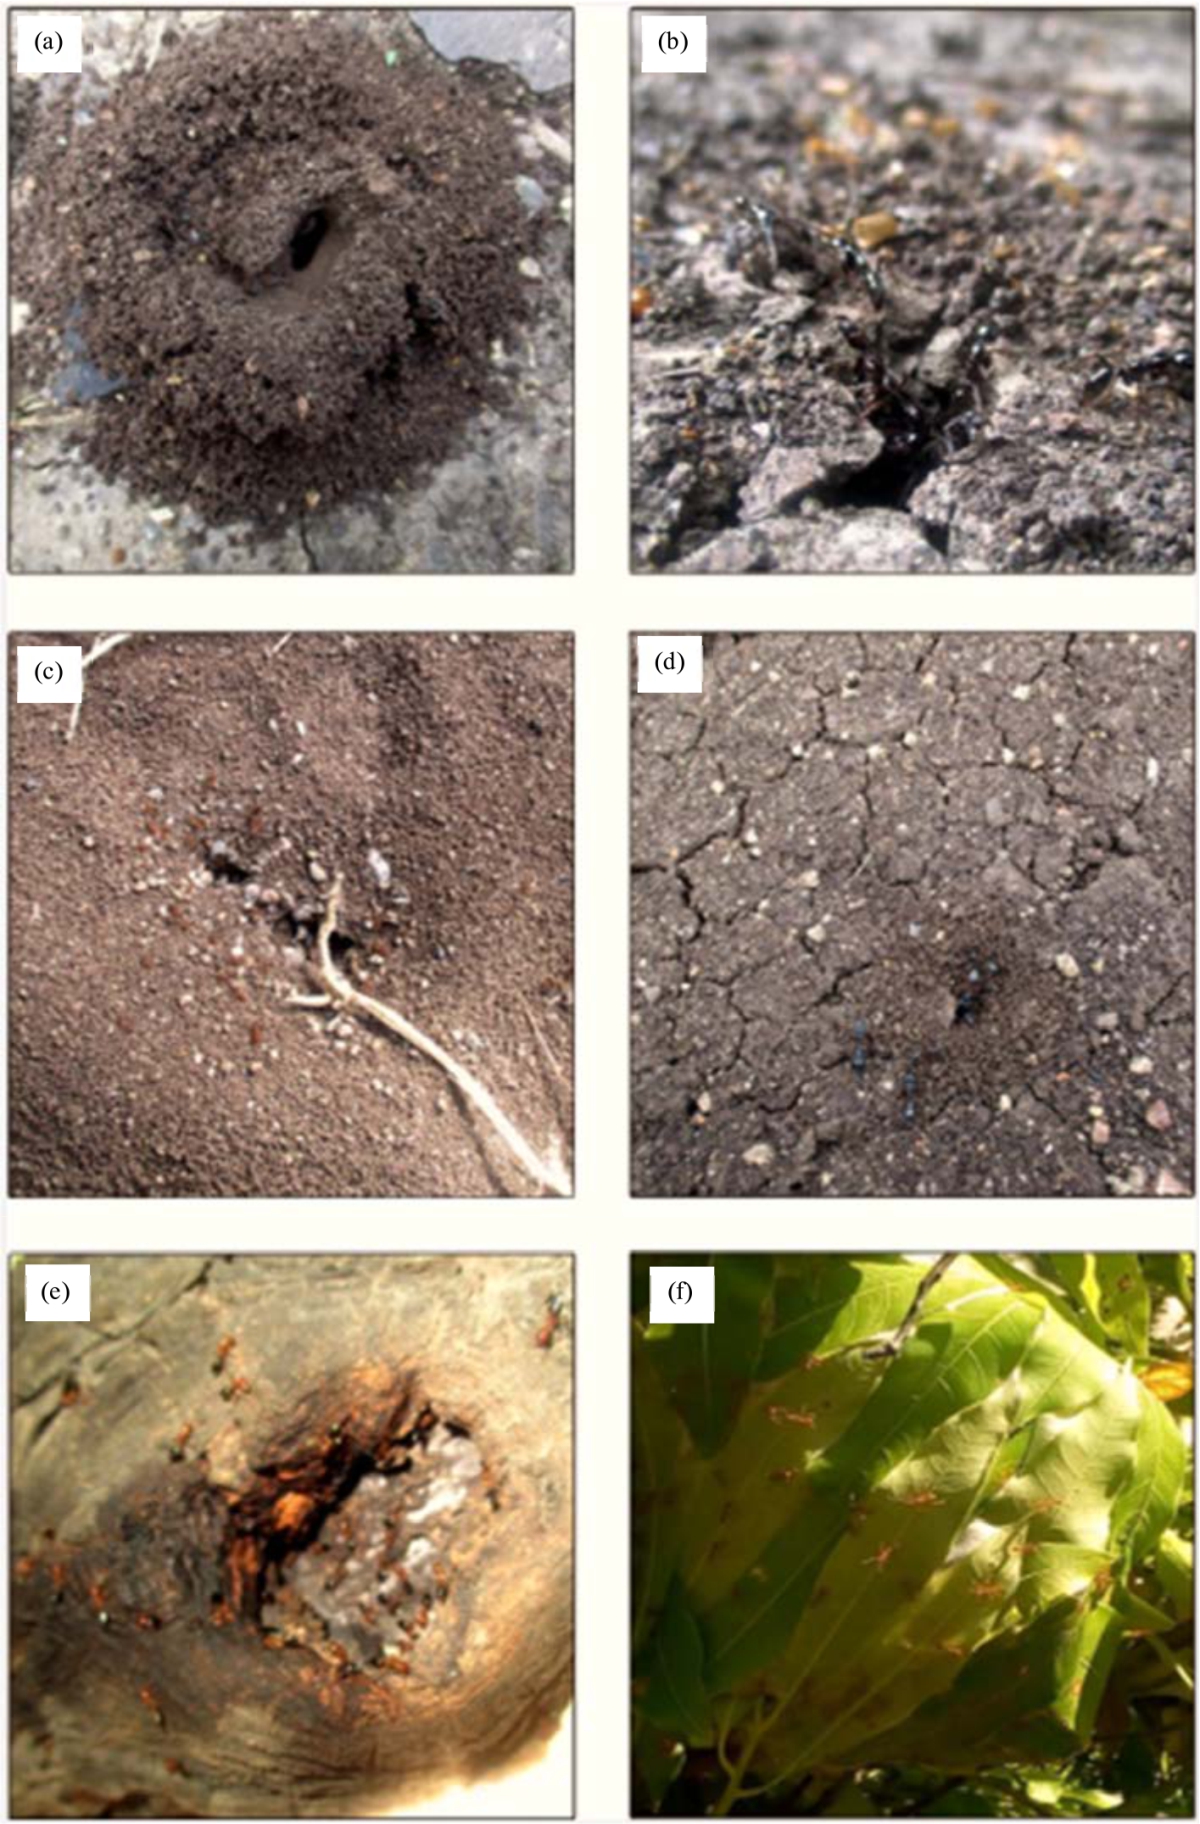 Image for - Nests and Habitats of Ants Observation in Aurangabad Maharashtra, India